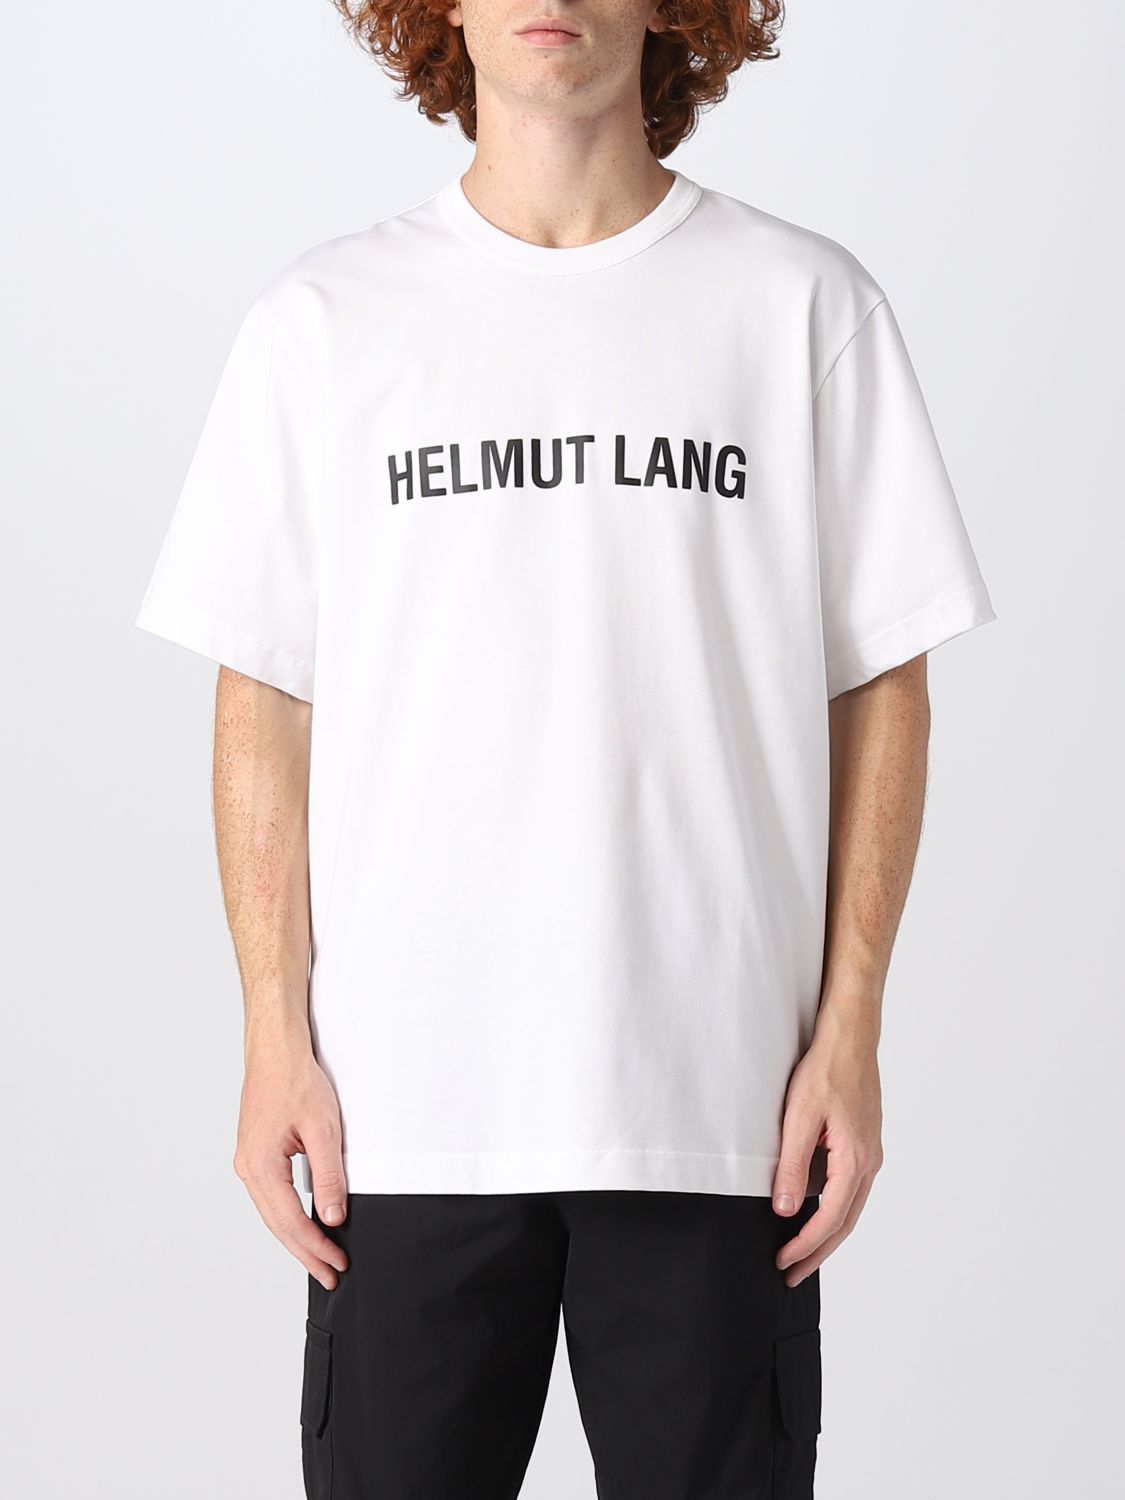 Tシャツ Helmut Lang: Tシャツ Helmut Lang メンズ ホワイト 1